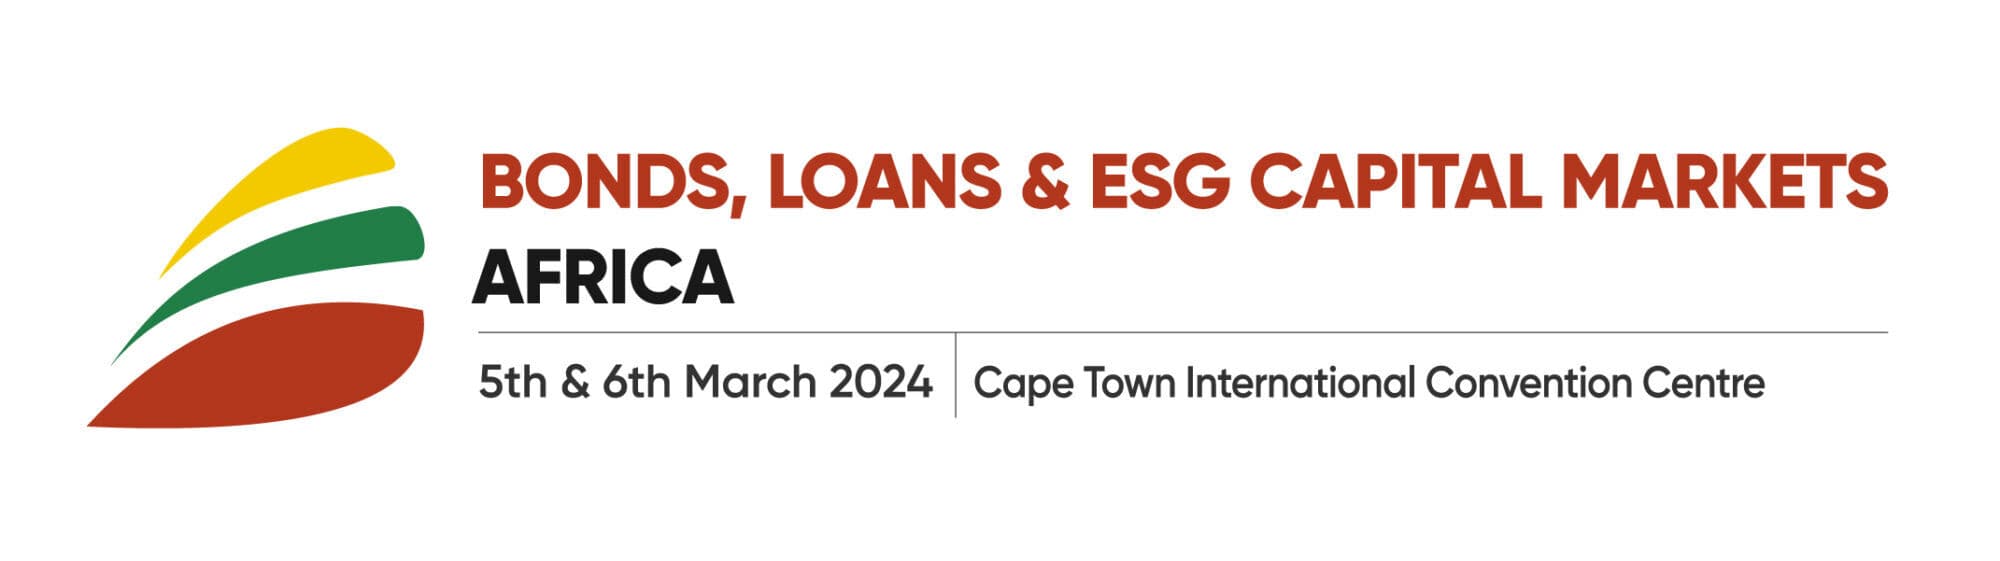 Bonds, Loans & ESG Capital Markets Africa 2024